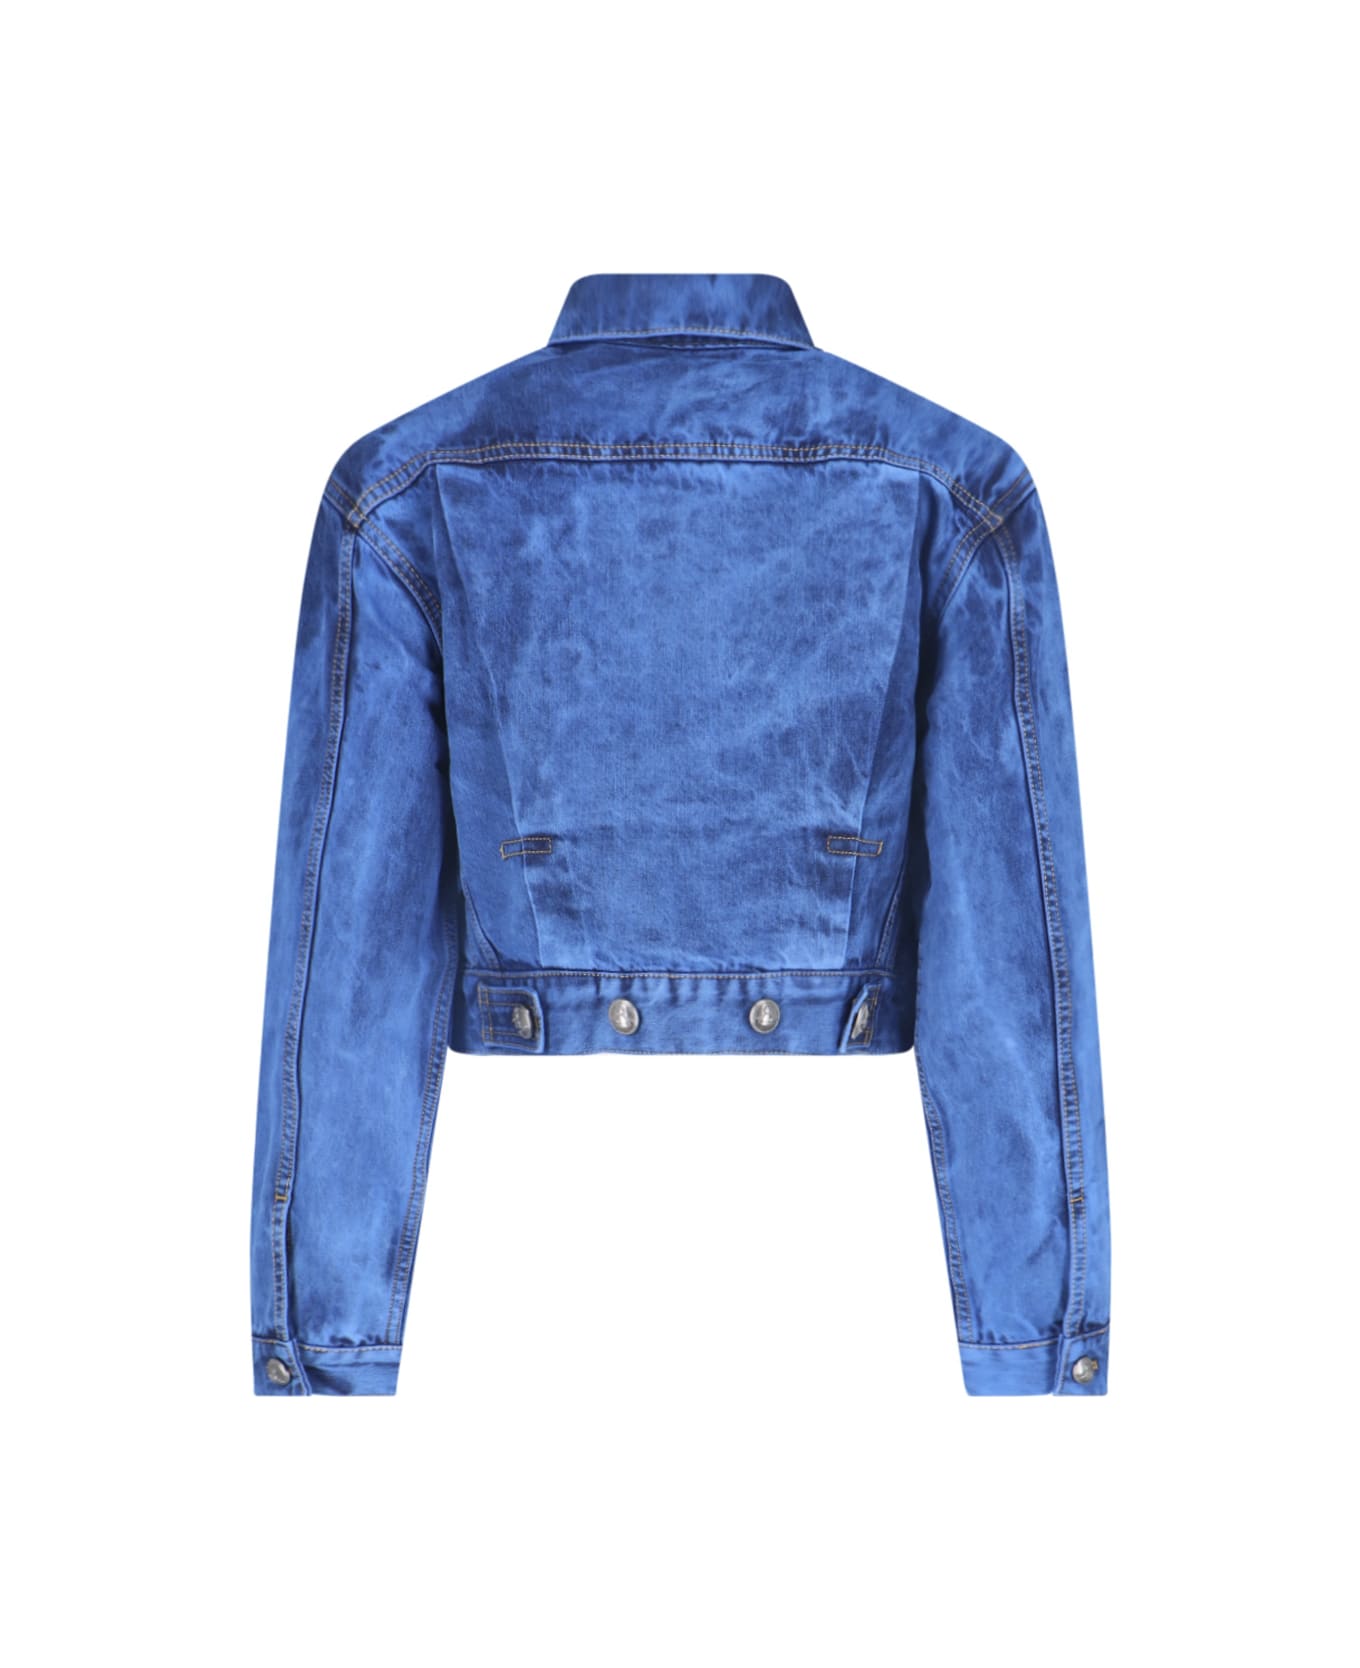 Vivienne Westwood Logo Denim Jacket - Blue